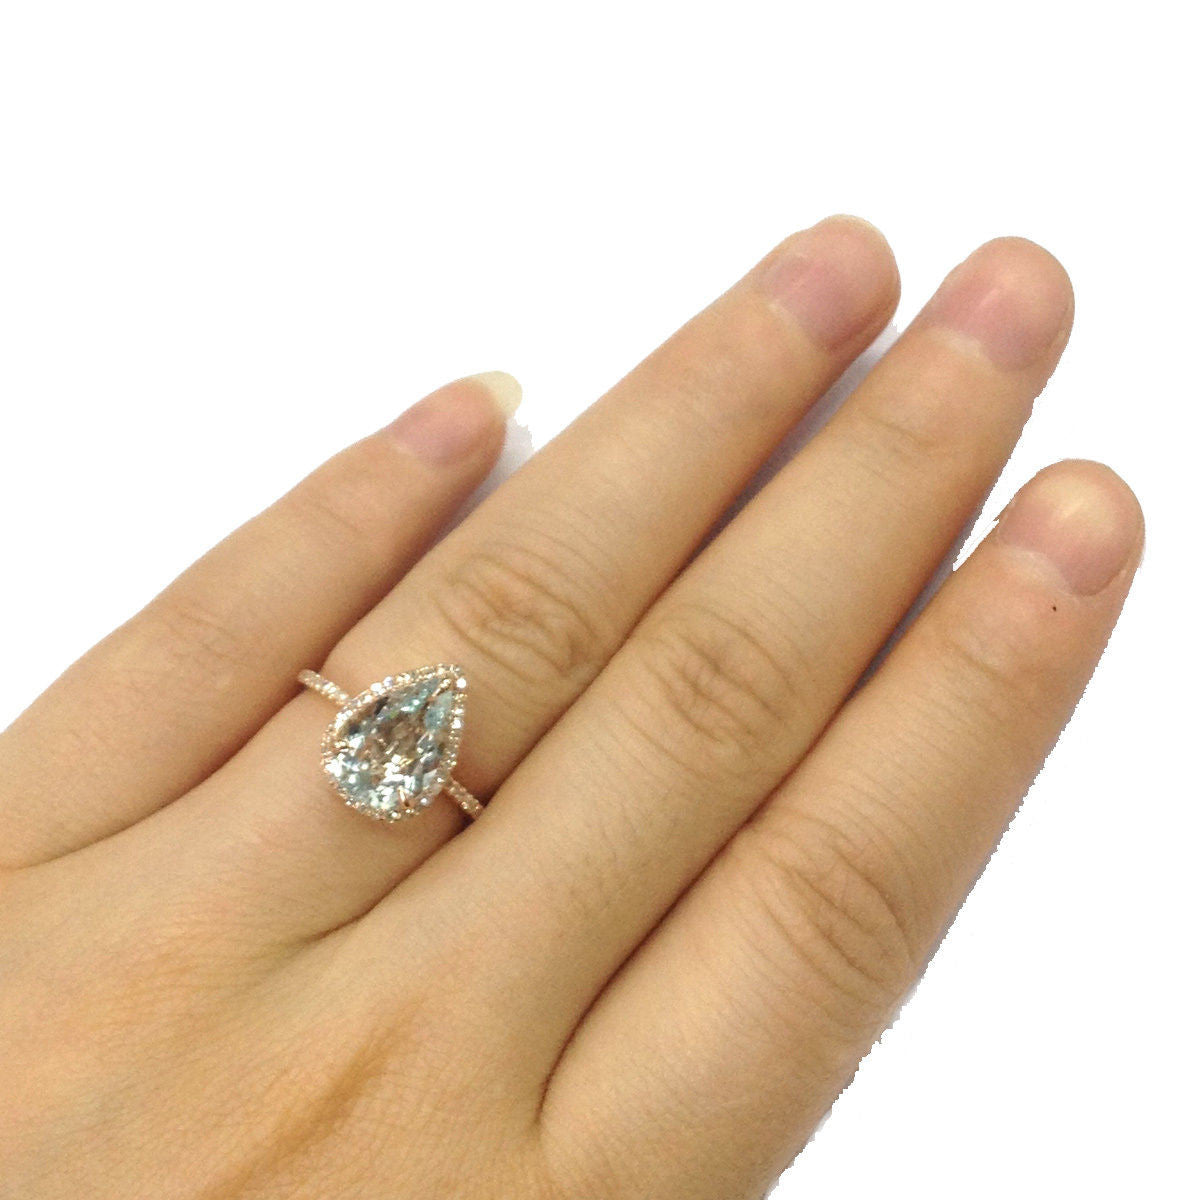 Pear Aquamarine Engagement Ring Pave Diamonds Wedding 14K Rose Gold,10x12mm - Lord of Gem Rings - 5